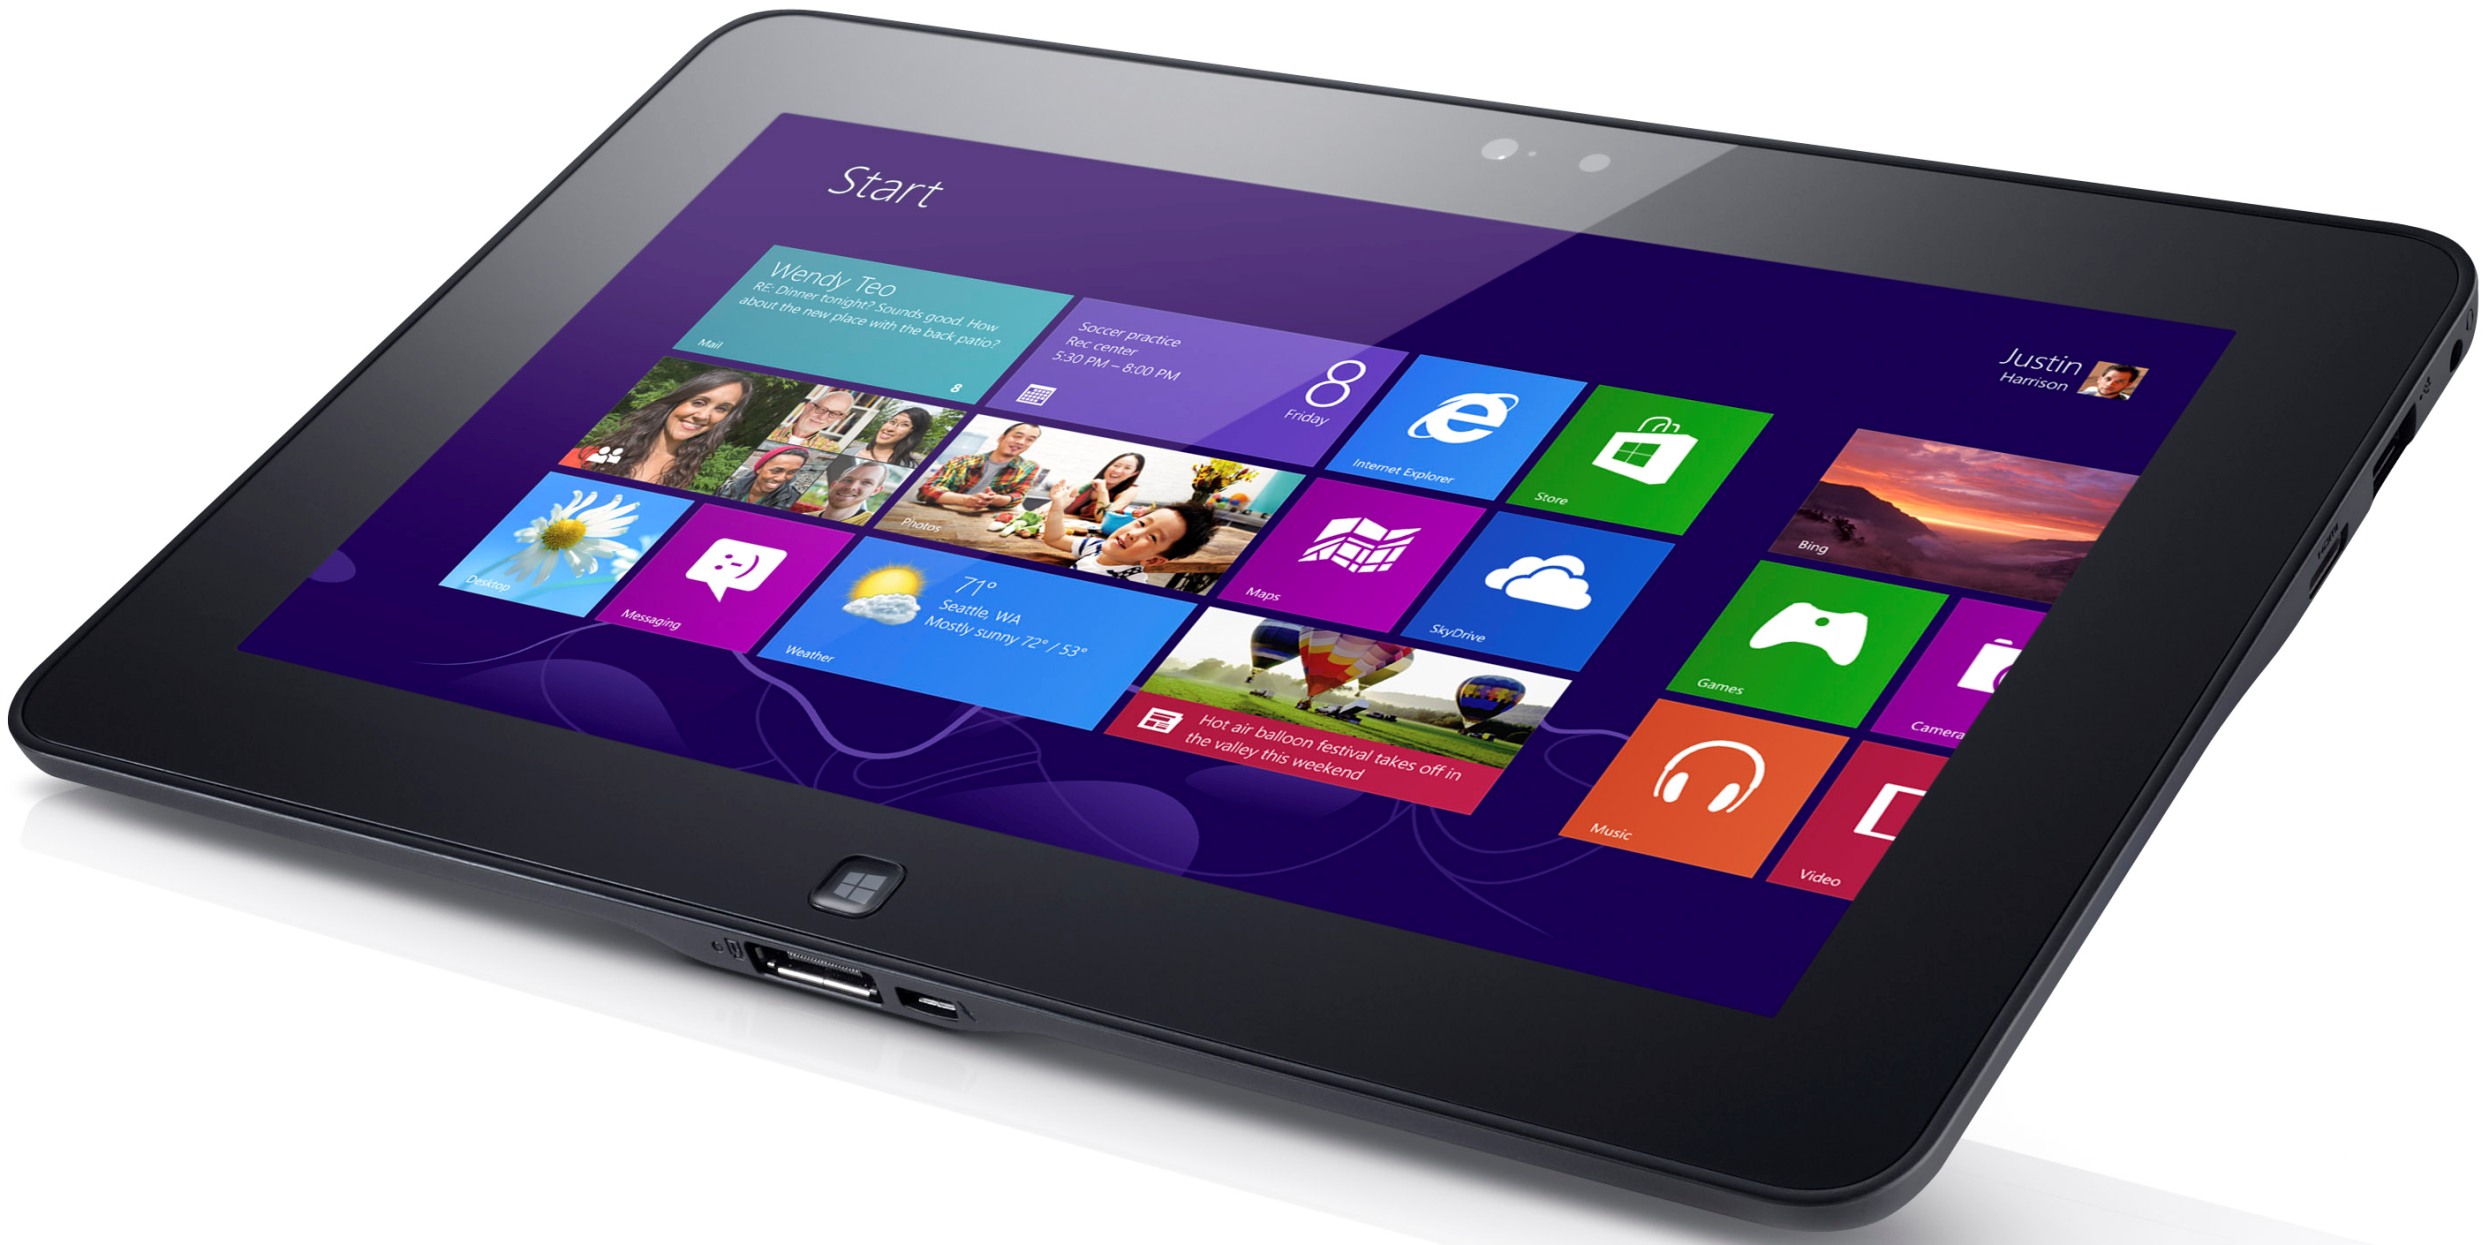 6646.Latitude 10 Windows 8 Pro tablet (blog)